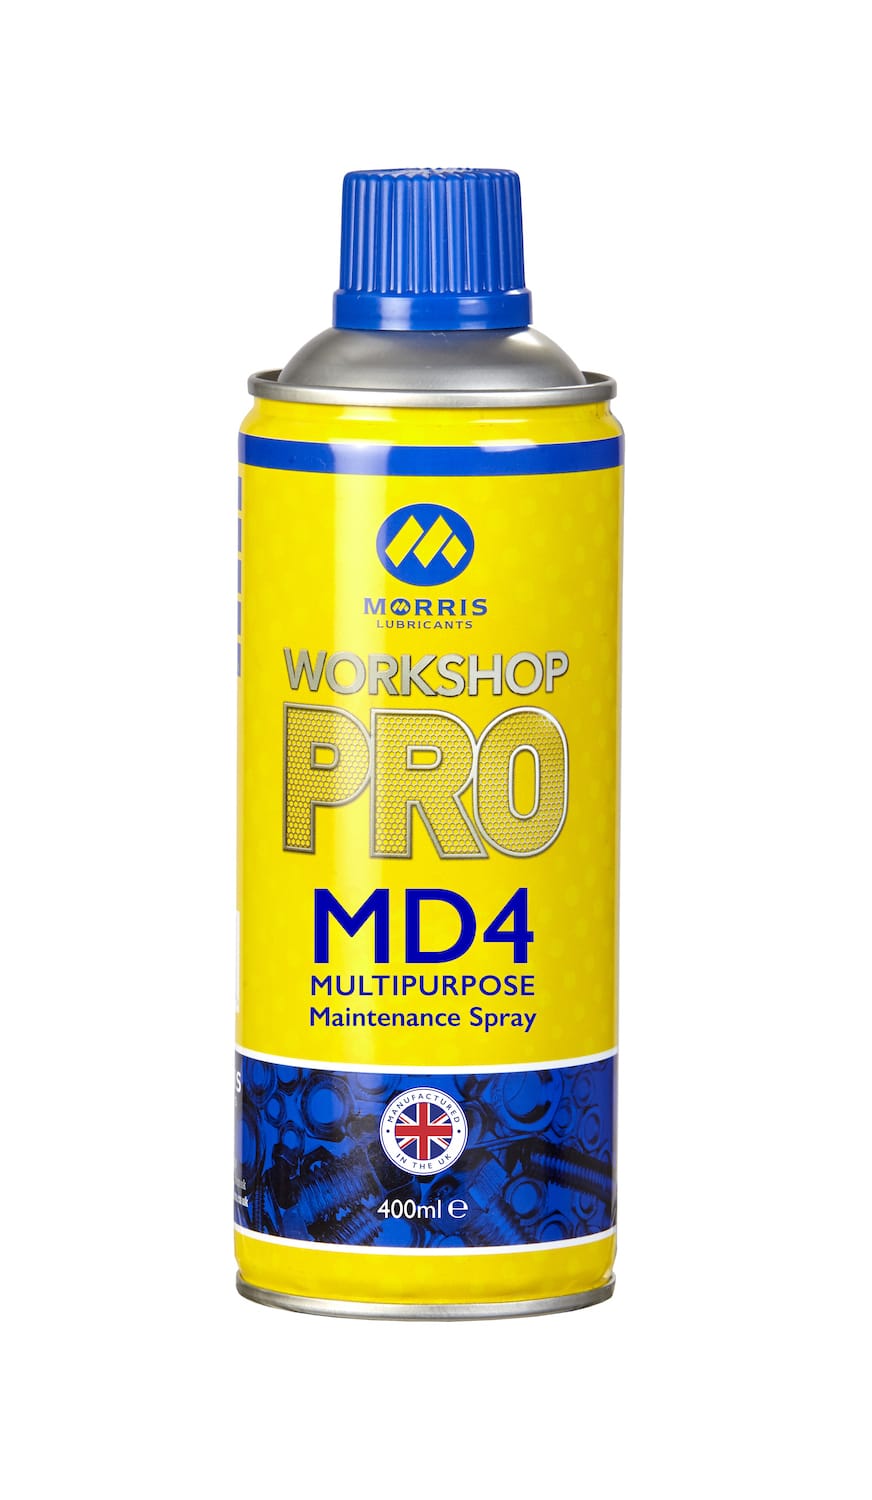 Workshop Pro MD4 Multipurpose Maintenance Spray